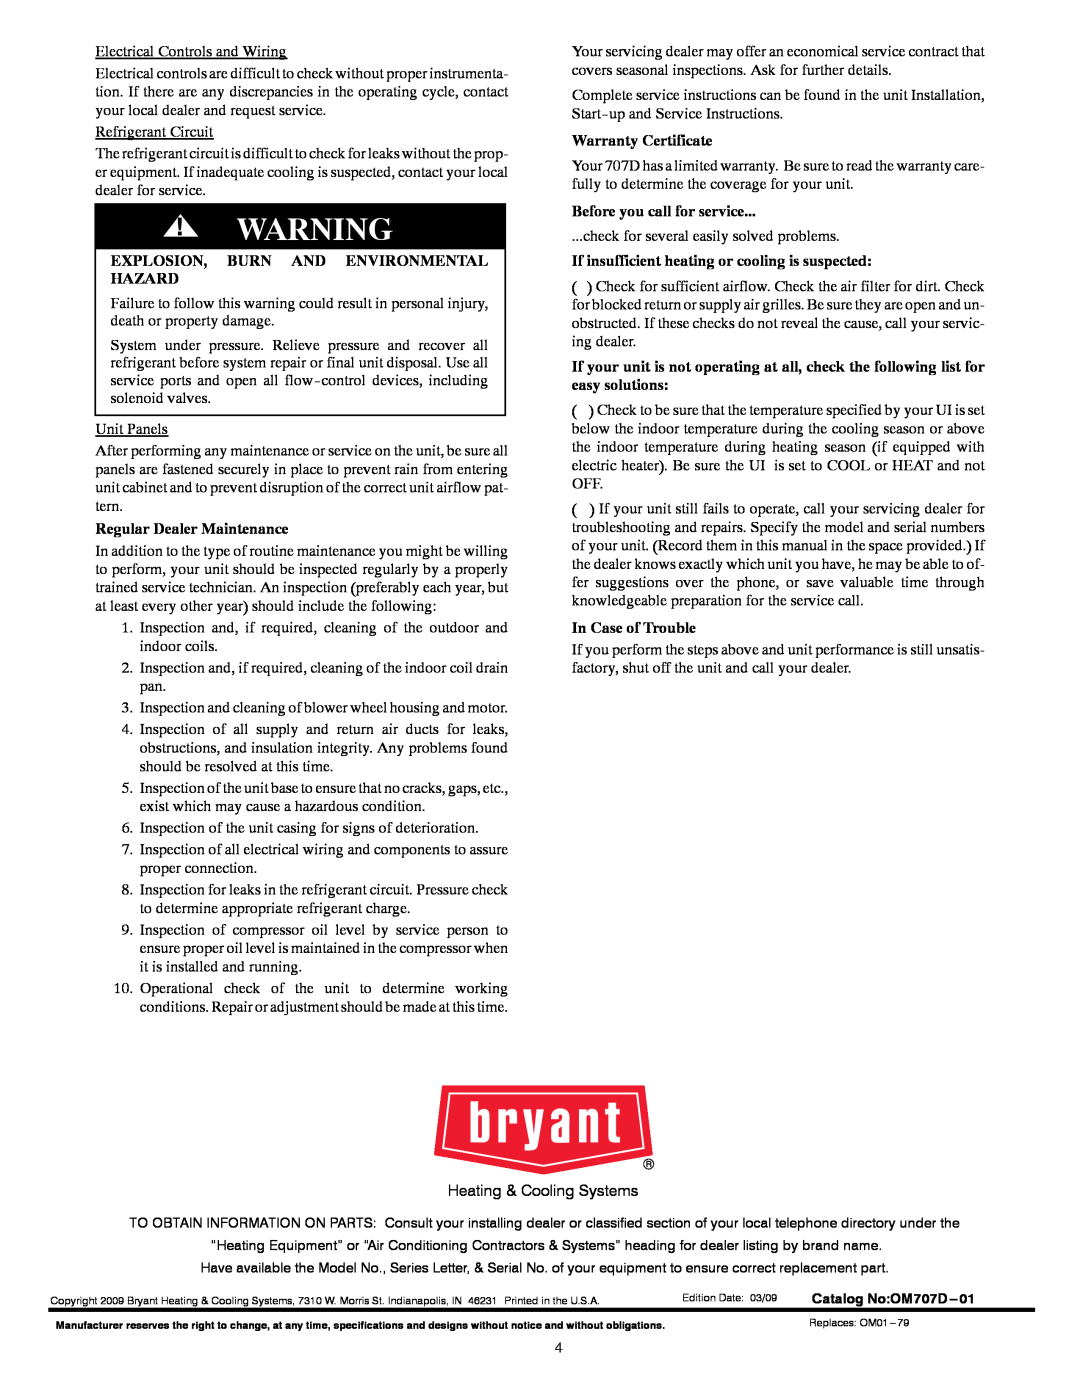 Bryant 707D Explosion, Burn And Environmental Hazard, Regular Dealer Maintenance, Warranty Certificate, In Case of Trouble 